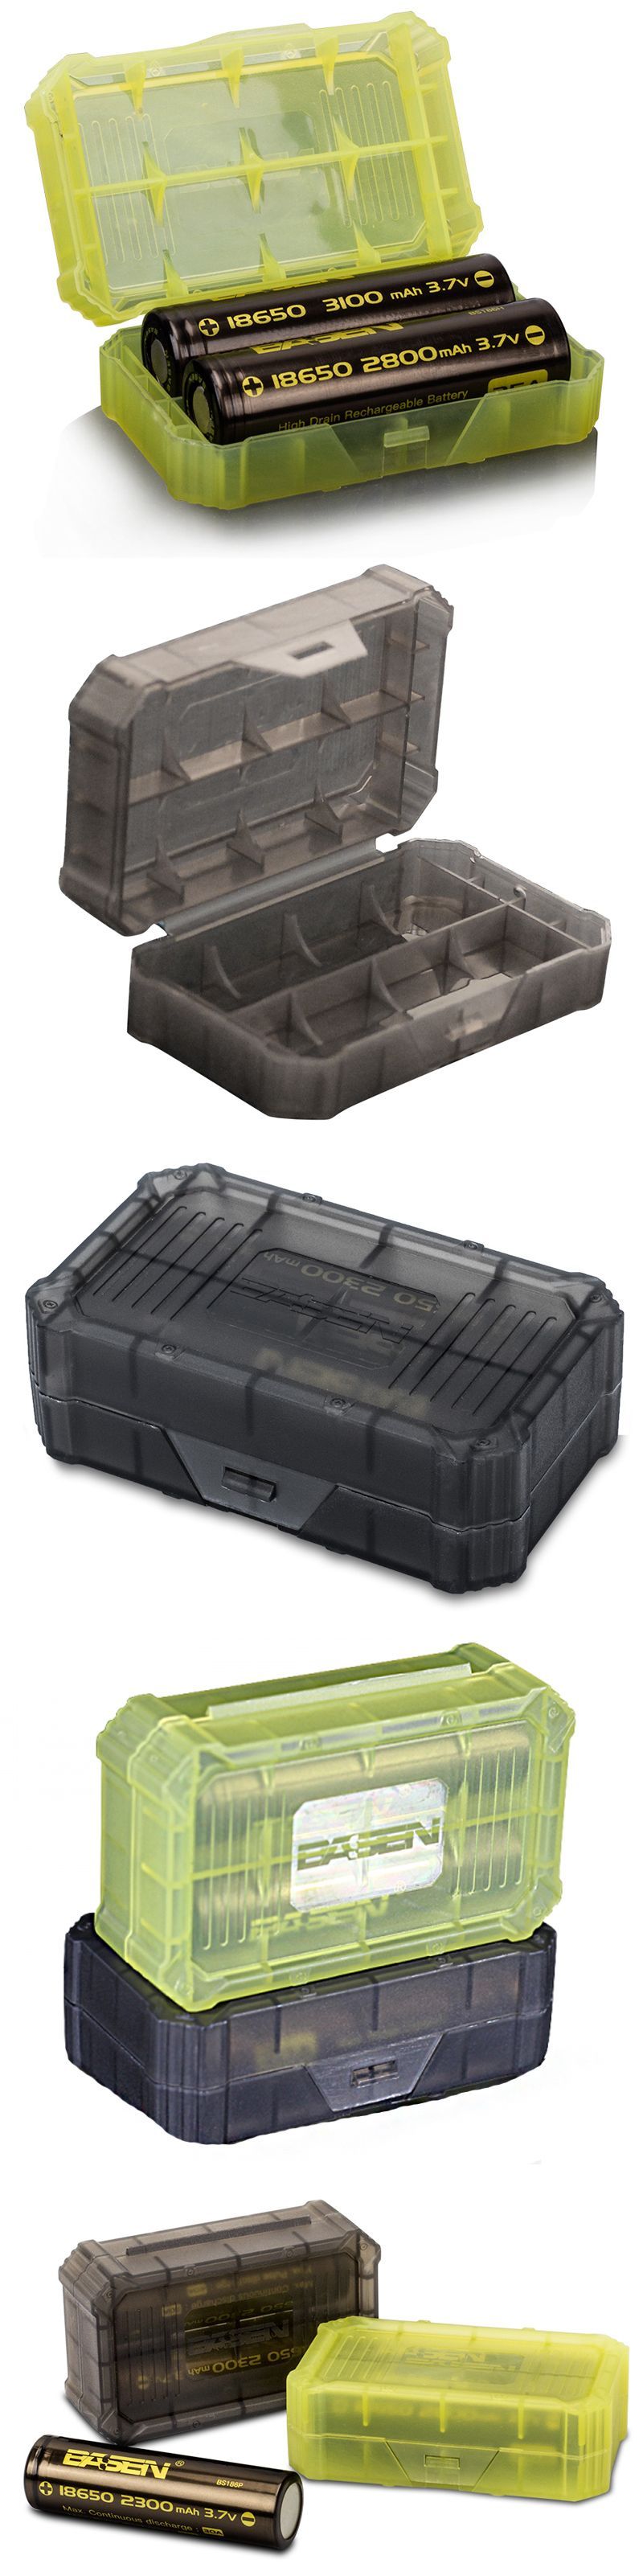 BASEN-Plastic-Battery-Holder-2-Pcs-18650-Battery-Storange-Box-Outdoor-Hunting-Camping-Portable-Batte-1397106